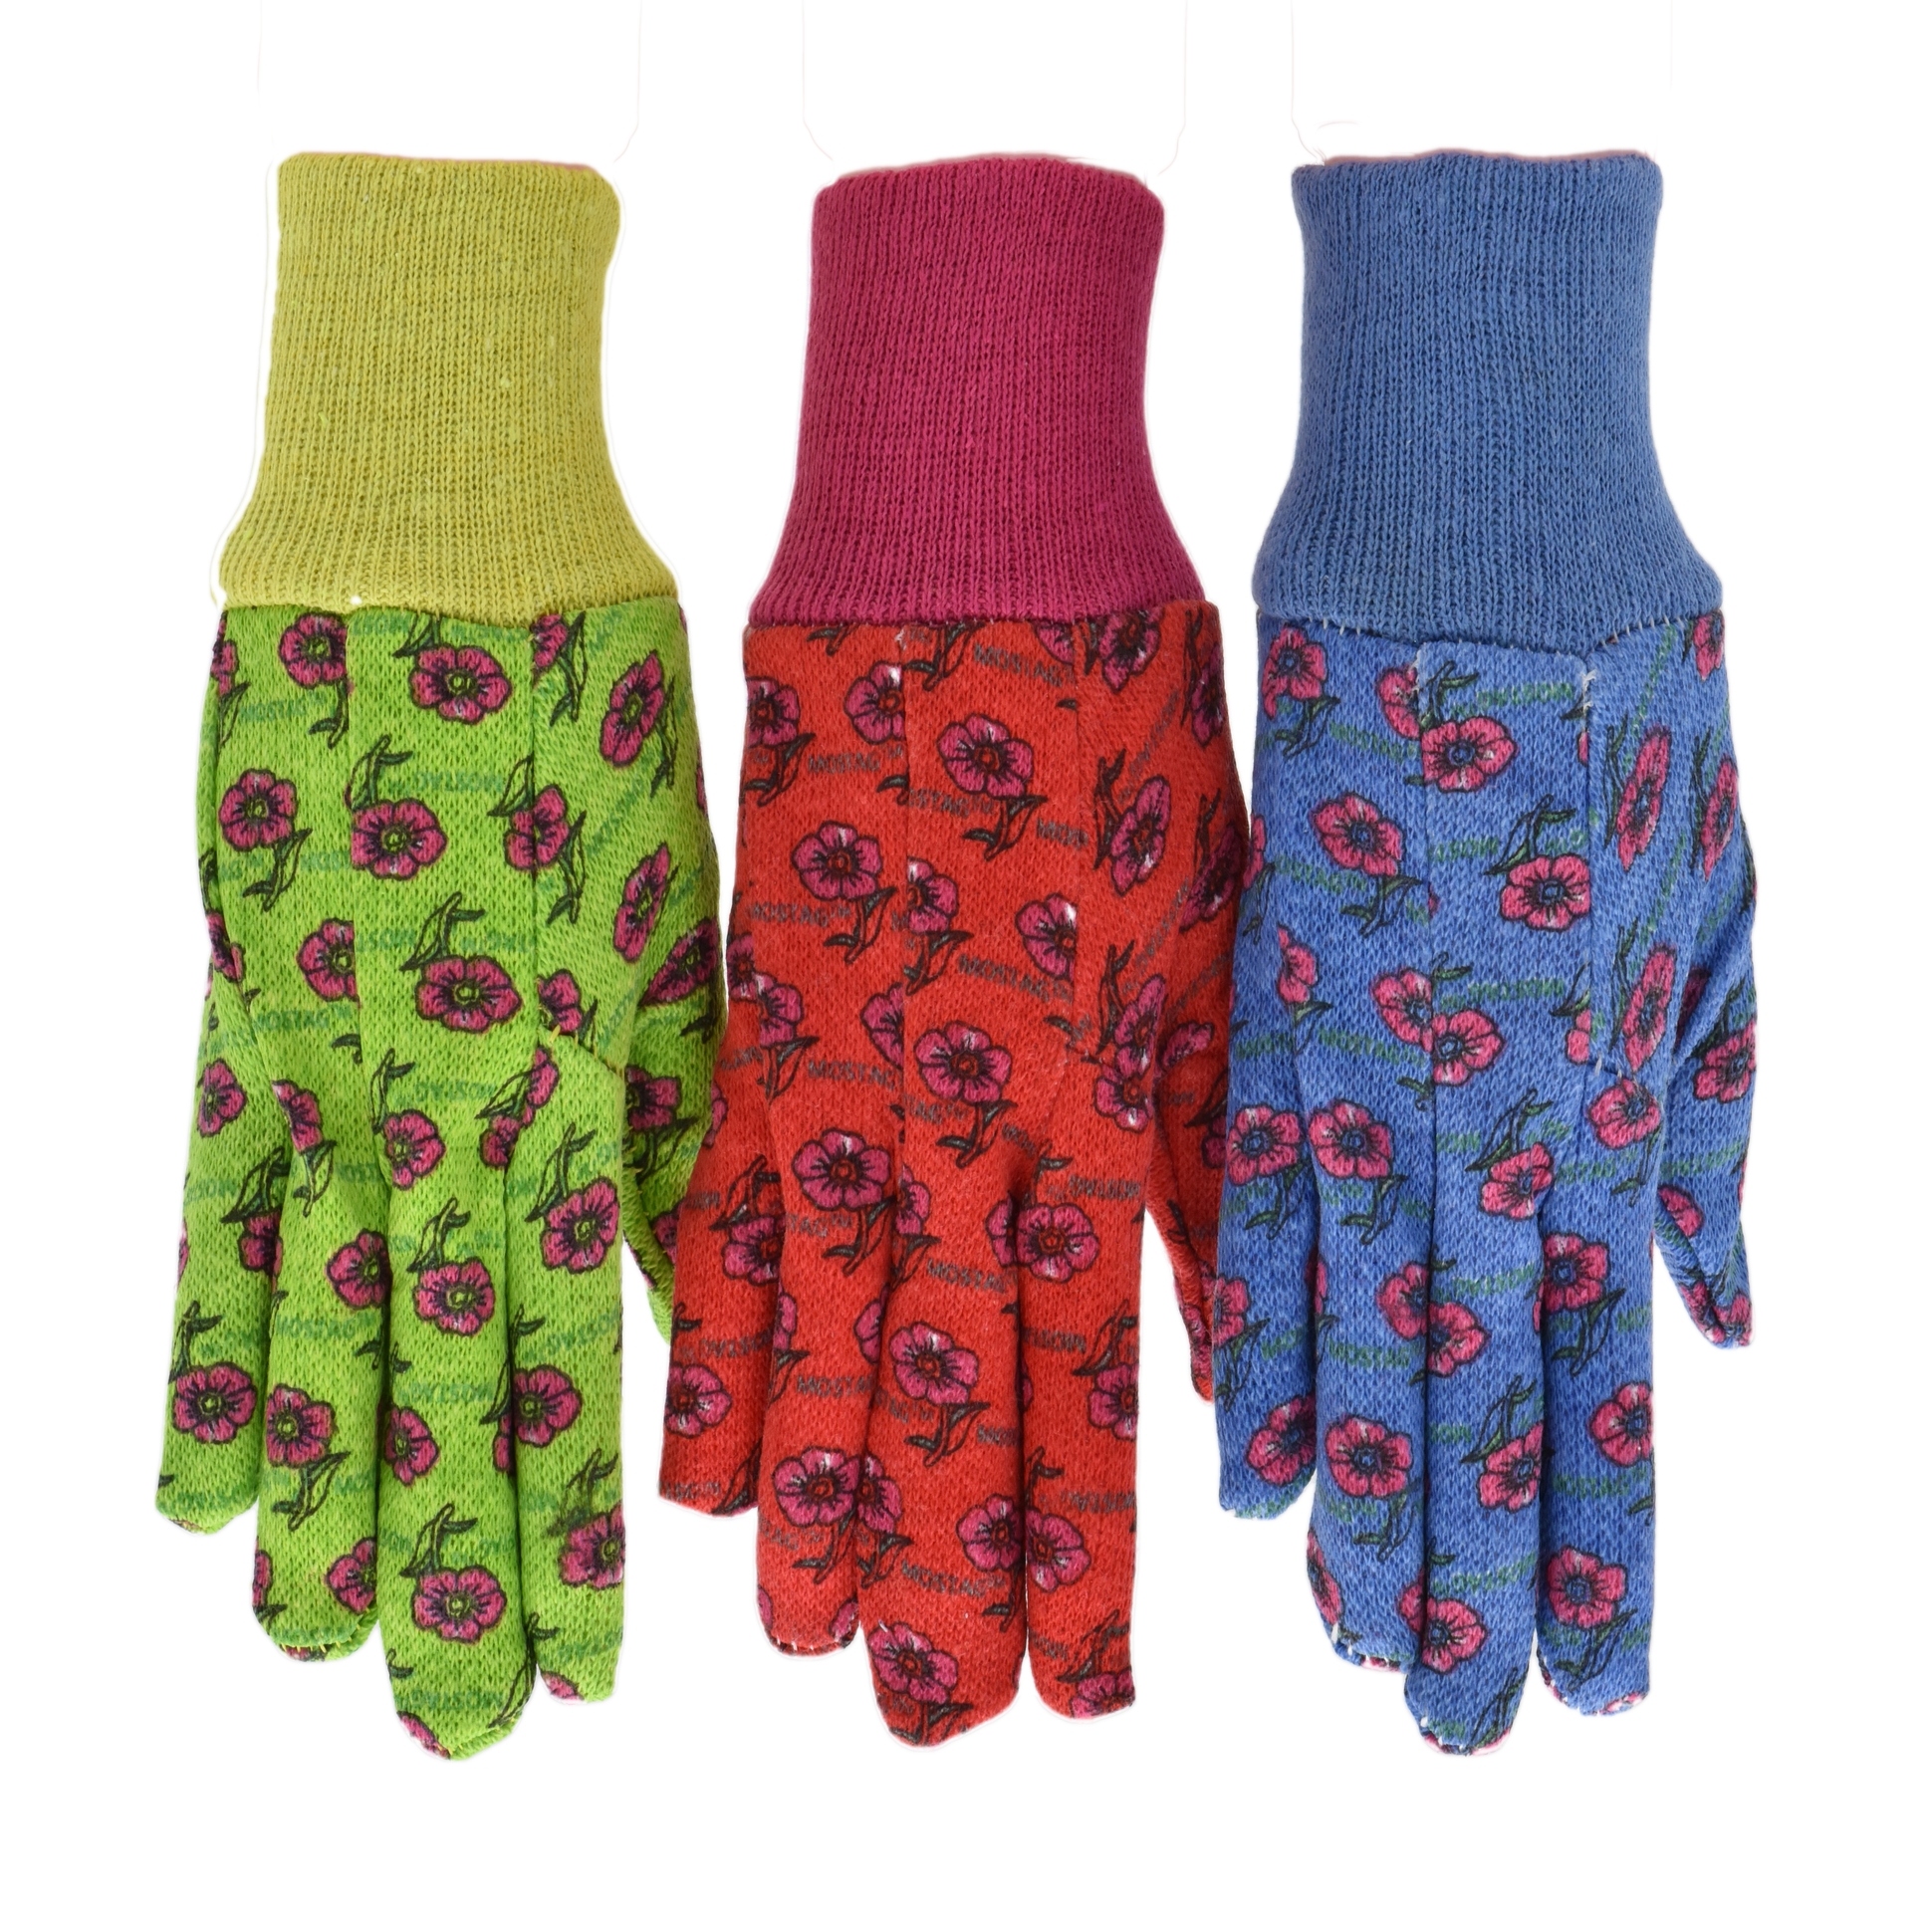 G & F Kids Garden Gloves 1823-3 JustForKids Work Gloves, 3 Pairs Green/Red/Blue per Pack - image 1 of 11